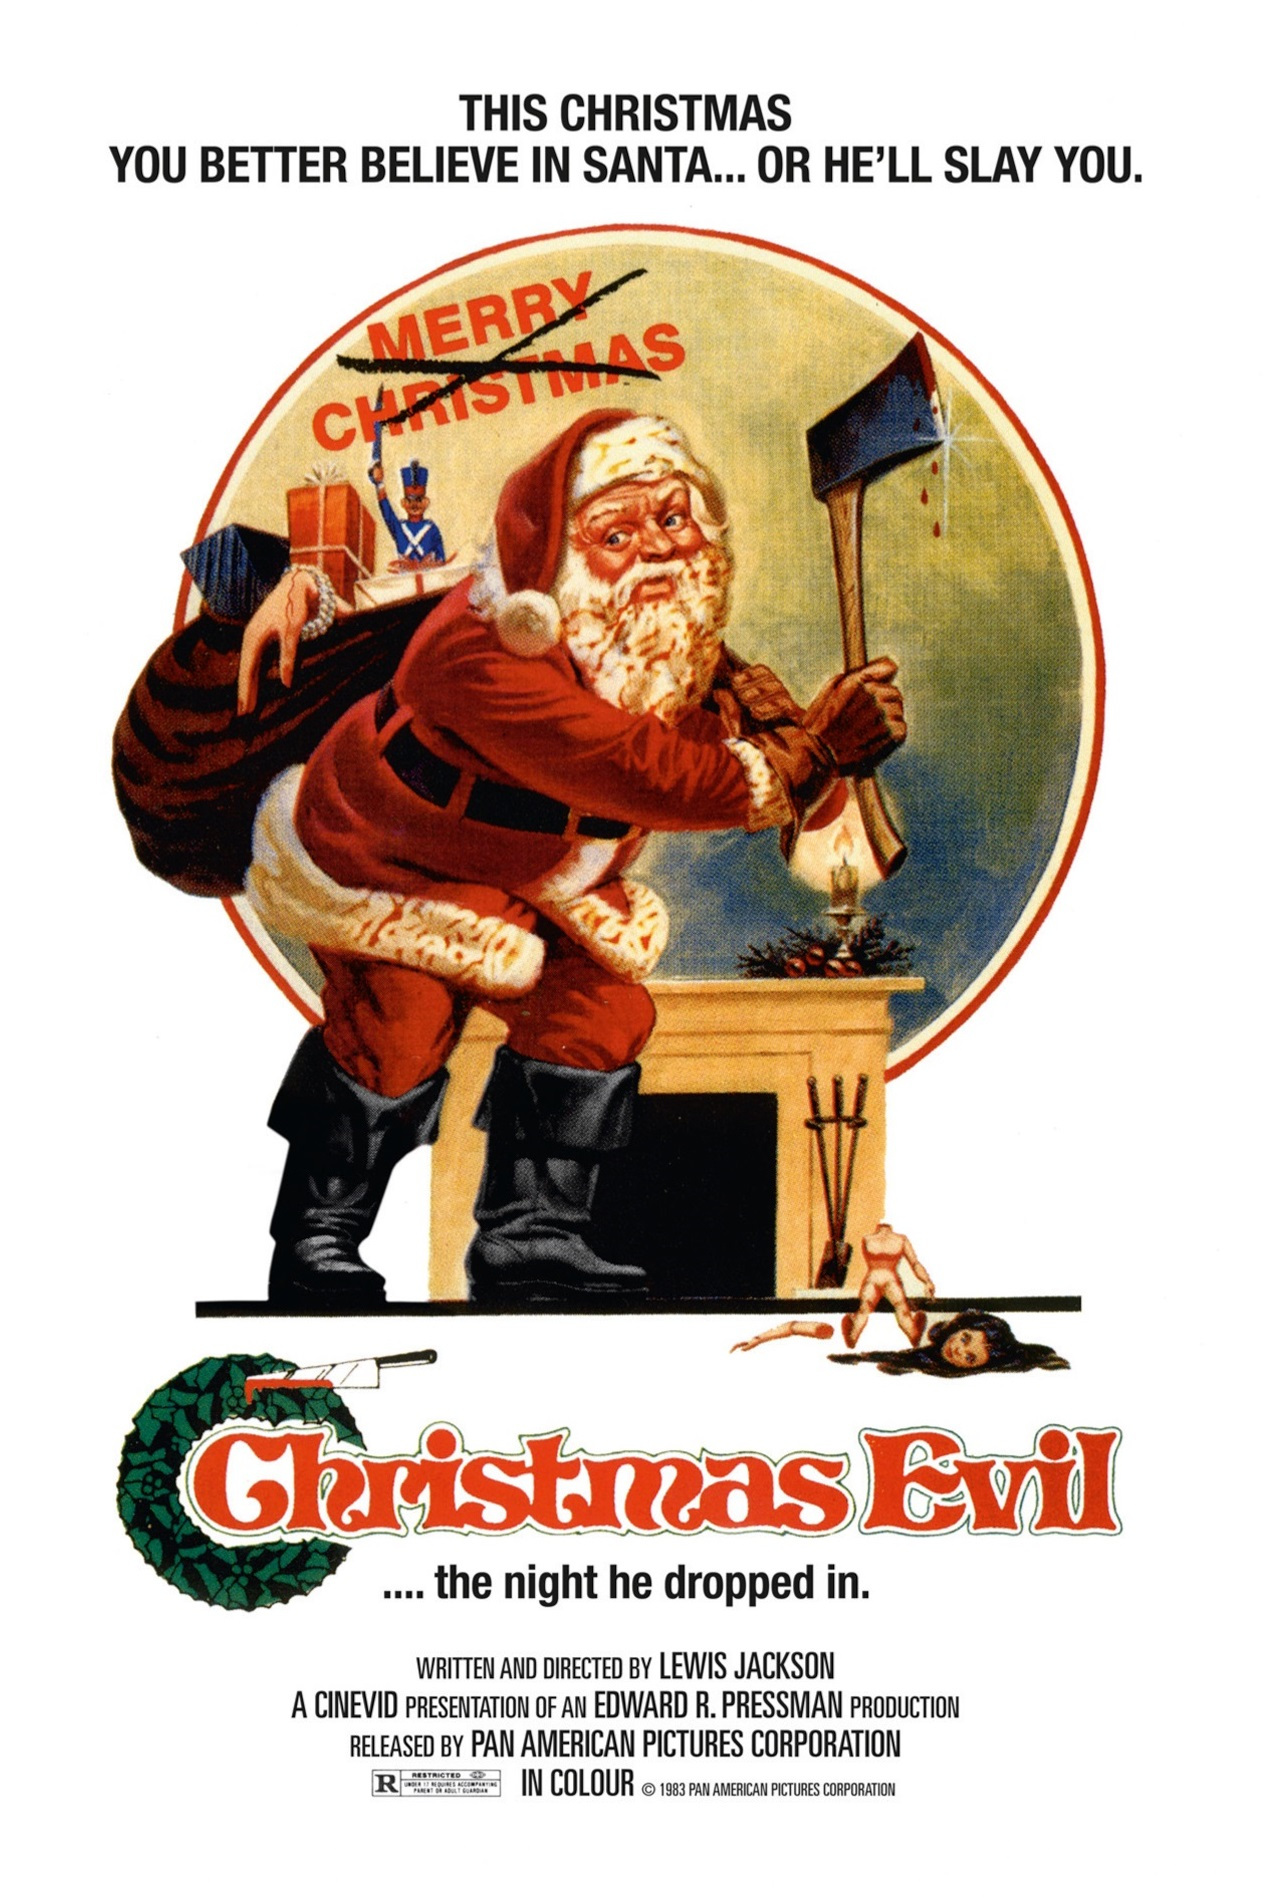 Stiahni si Filmy CZ/SK dabing Vanocni zlo / Christmas Evil (1980)(CZ)[DVDRip] = CSFD 33%